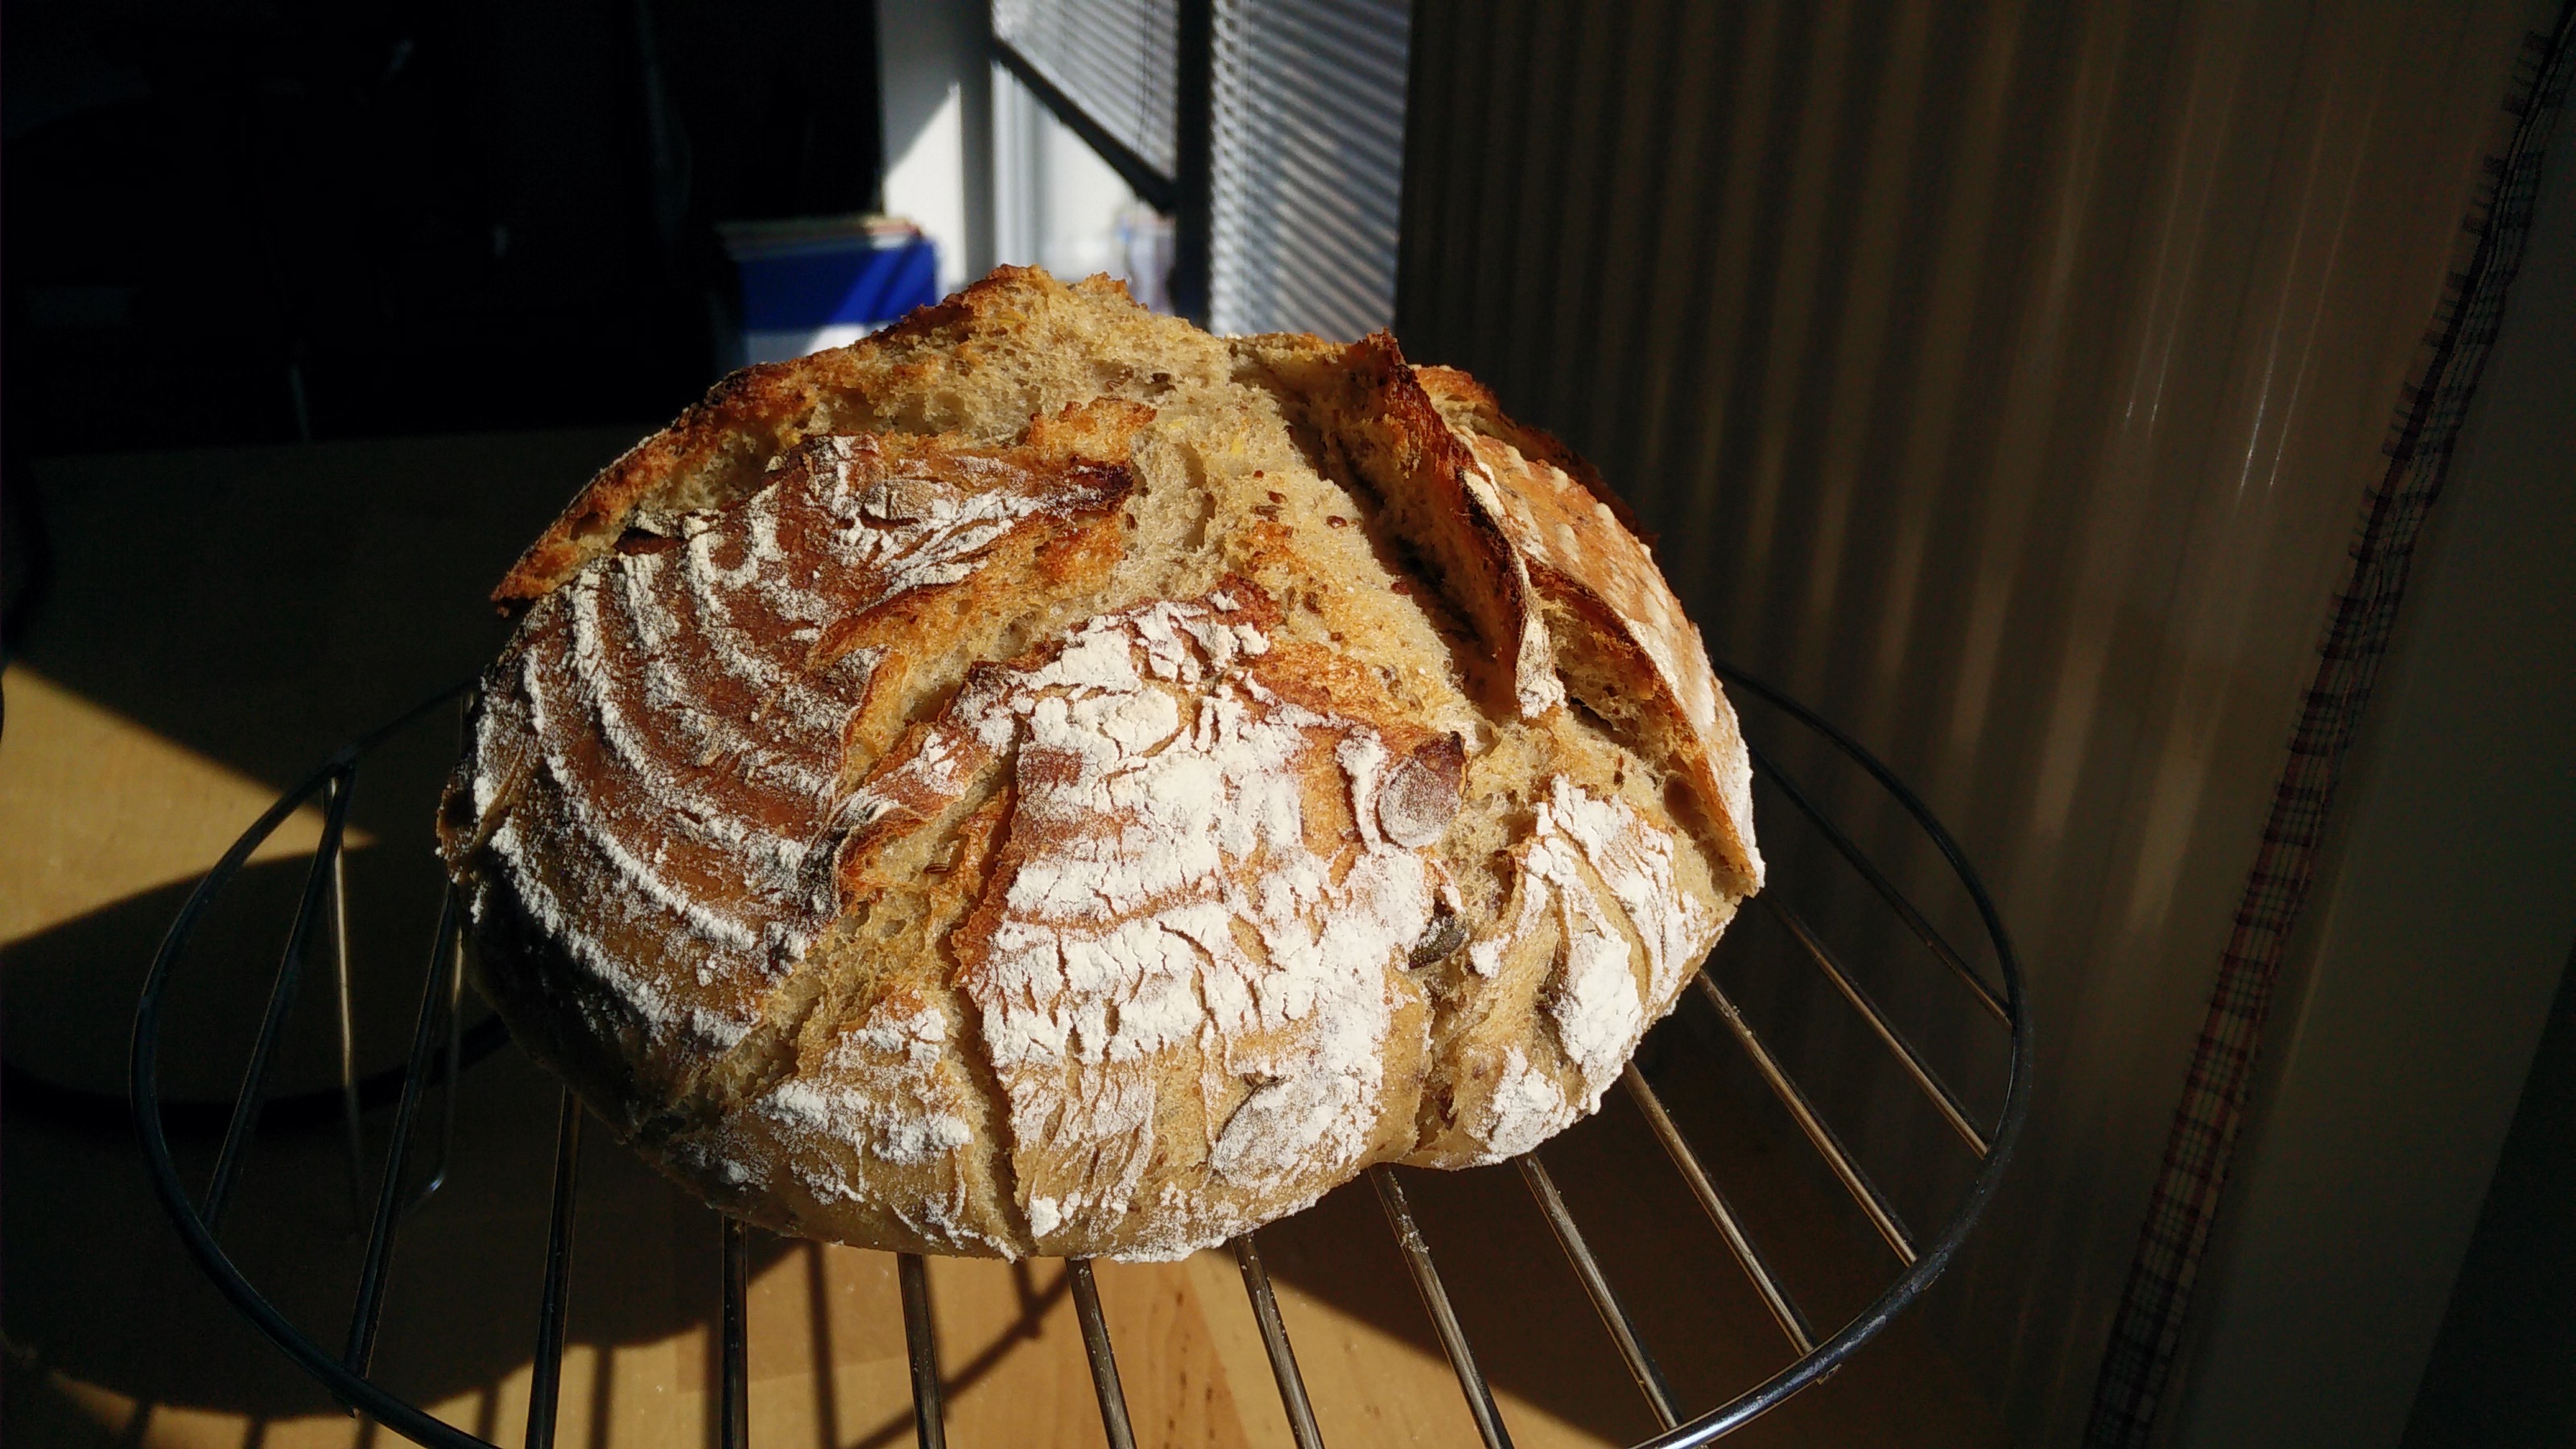 Bread photo data/2020-09-21/2020-09-21%2014.36.29.jpg